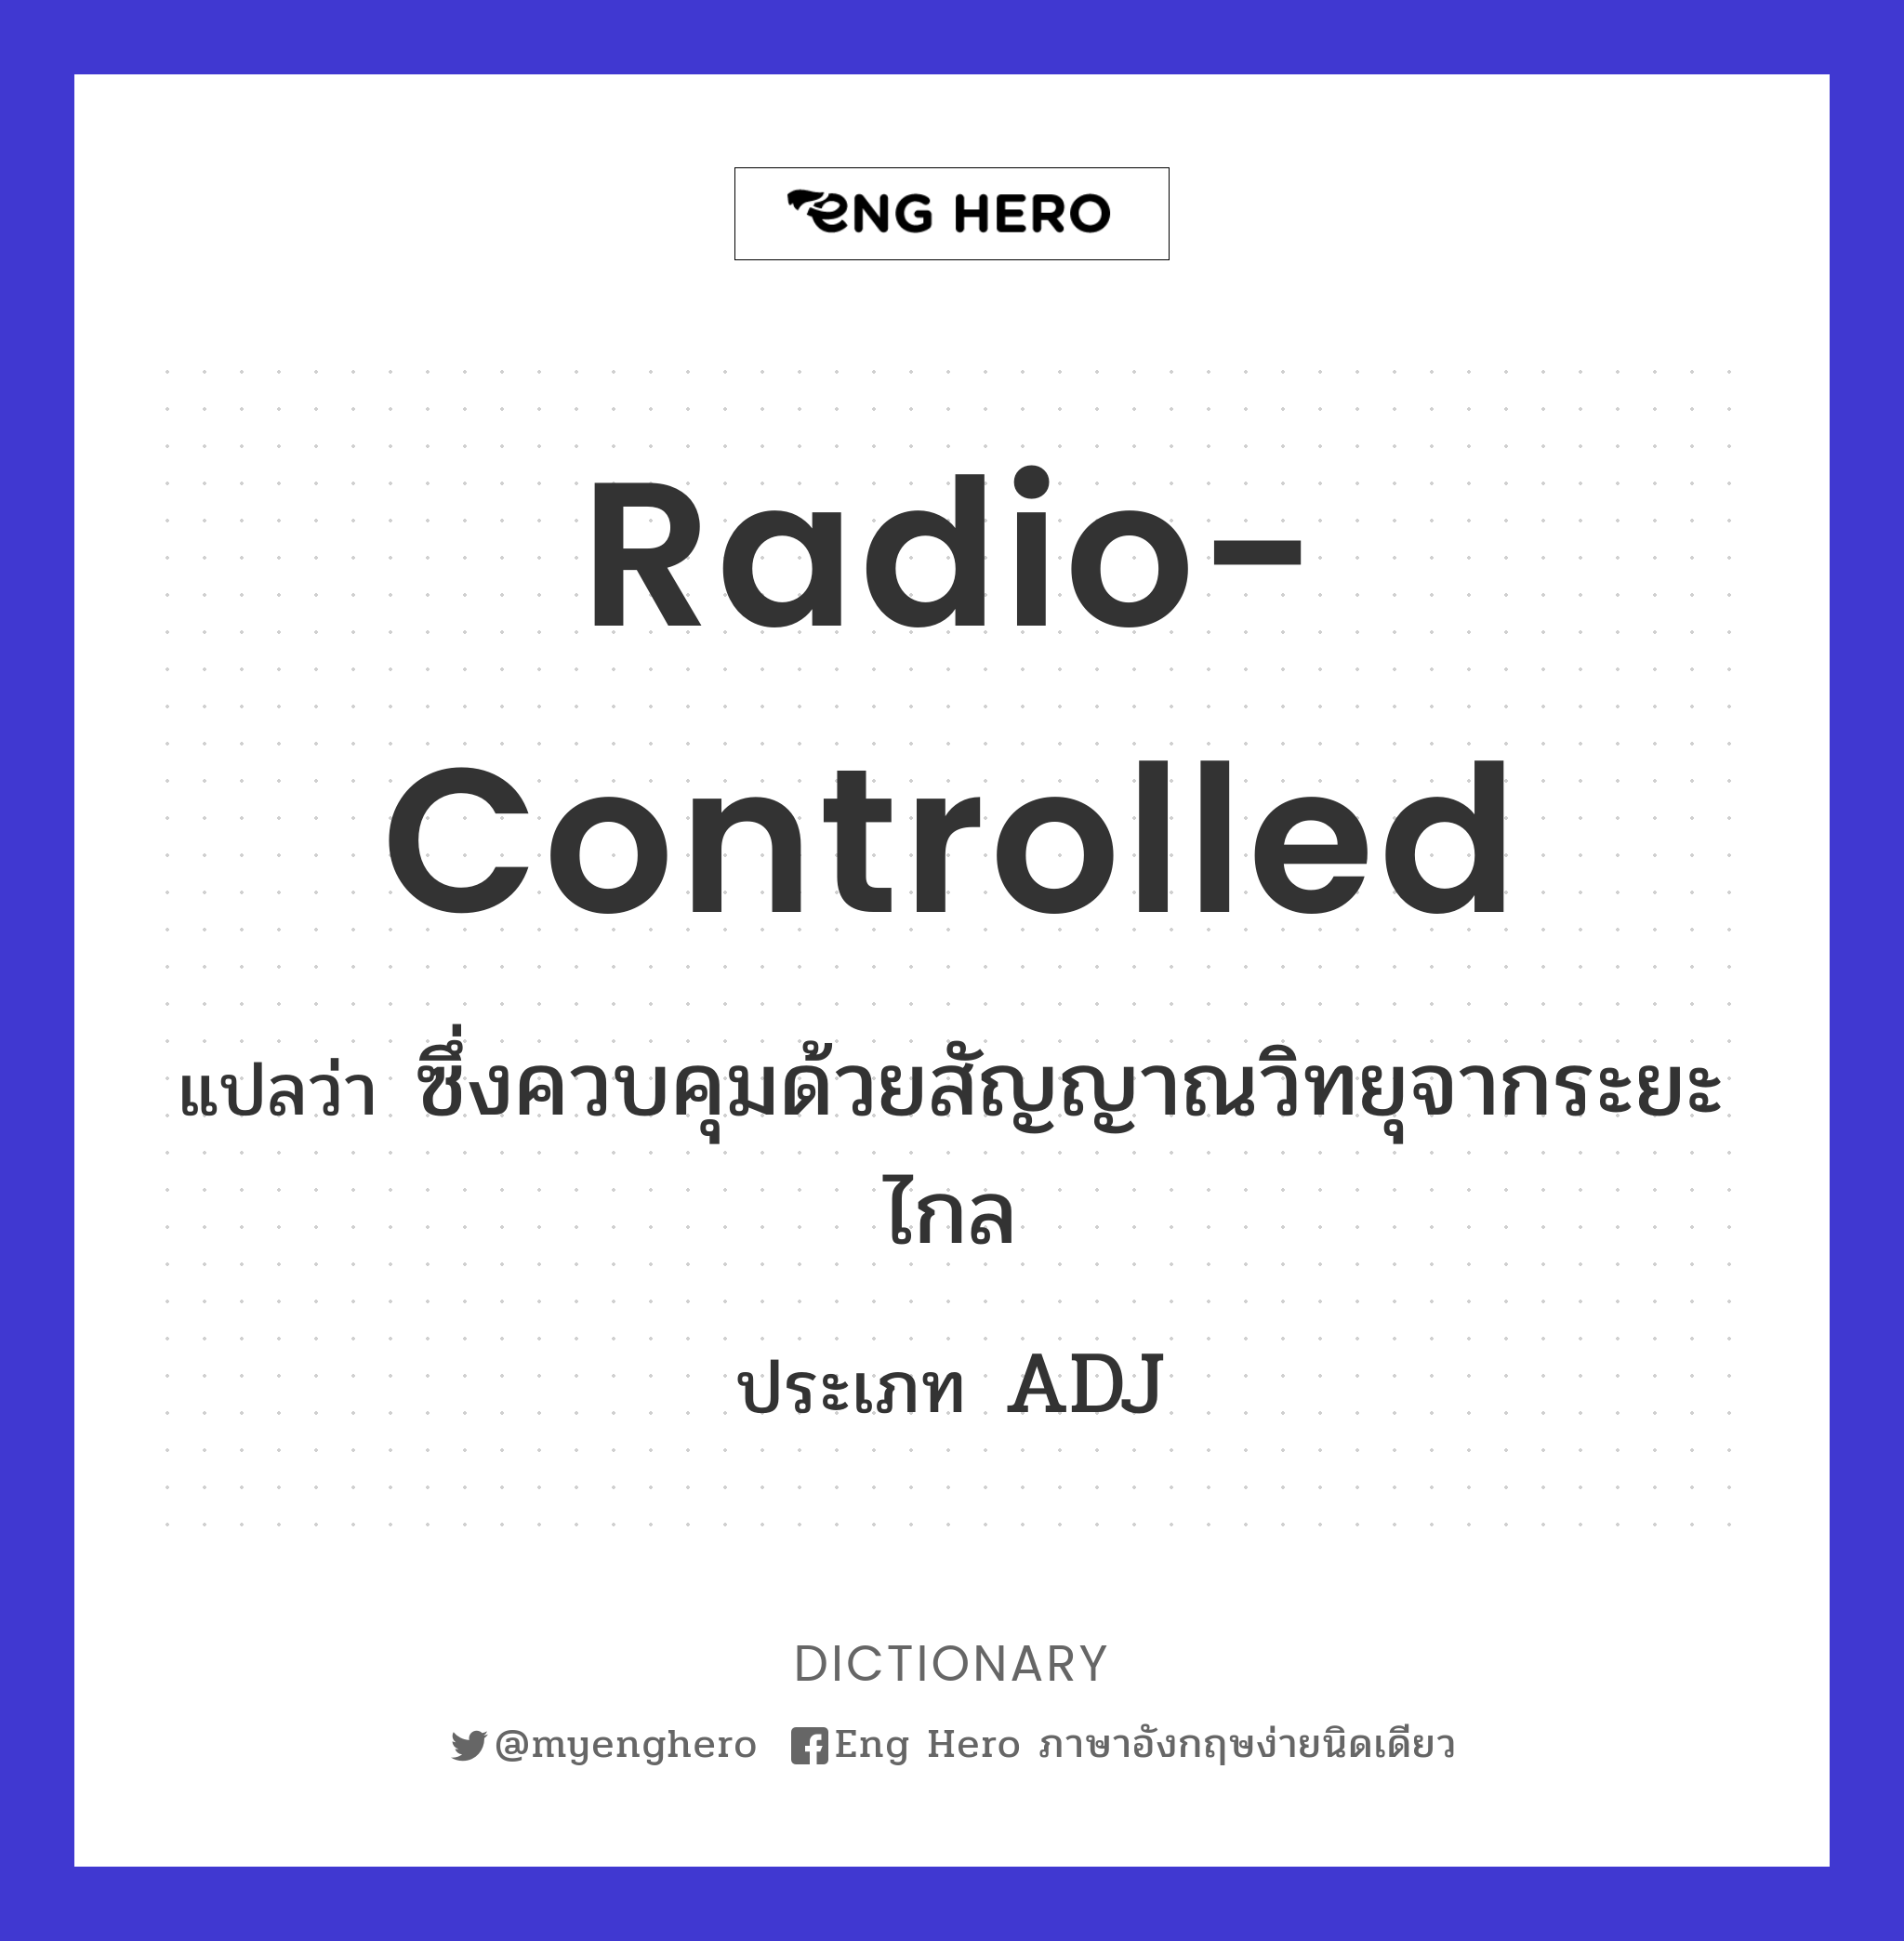 radio-controlled